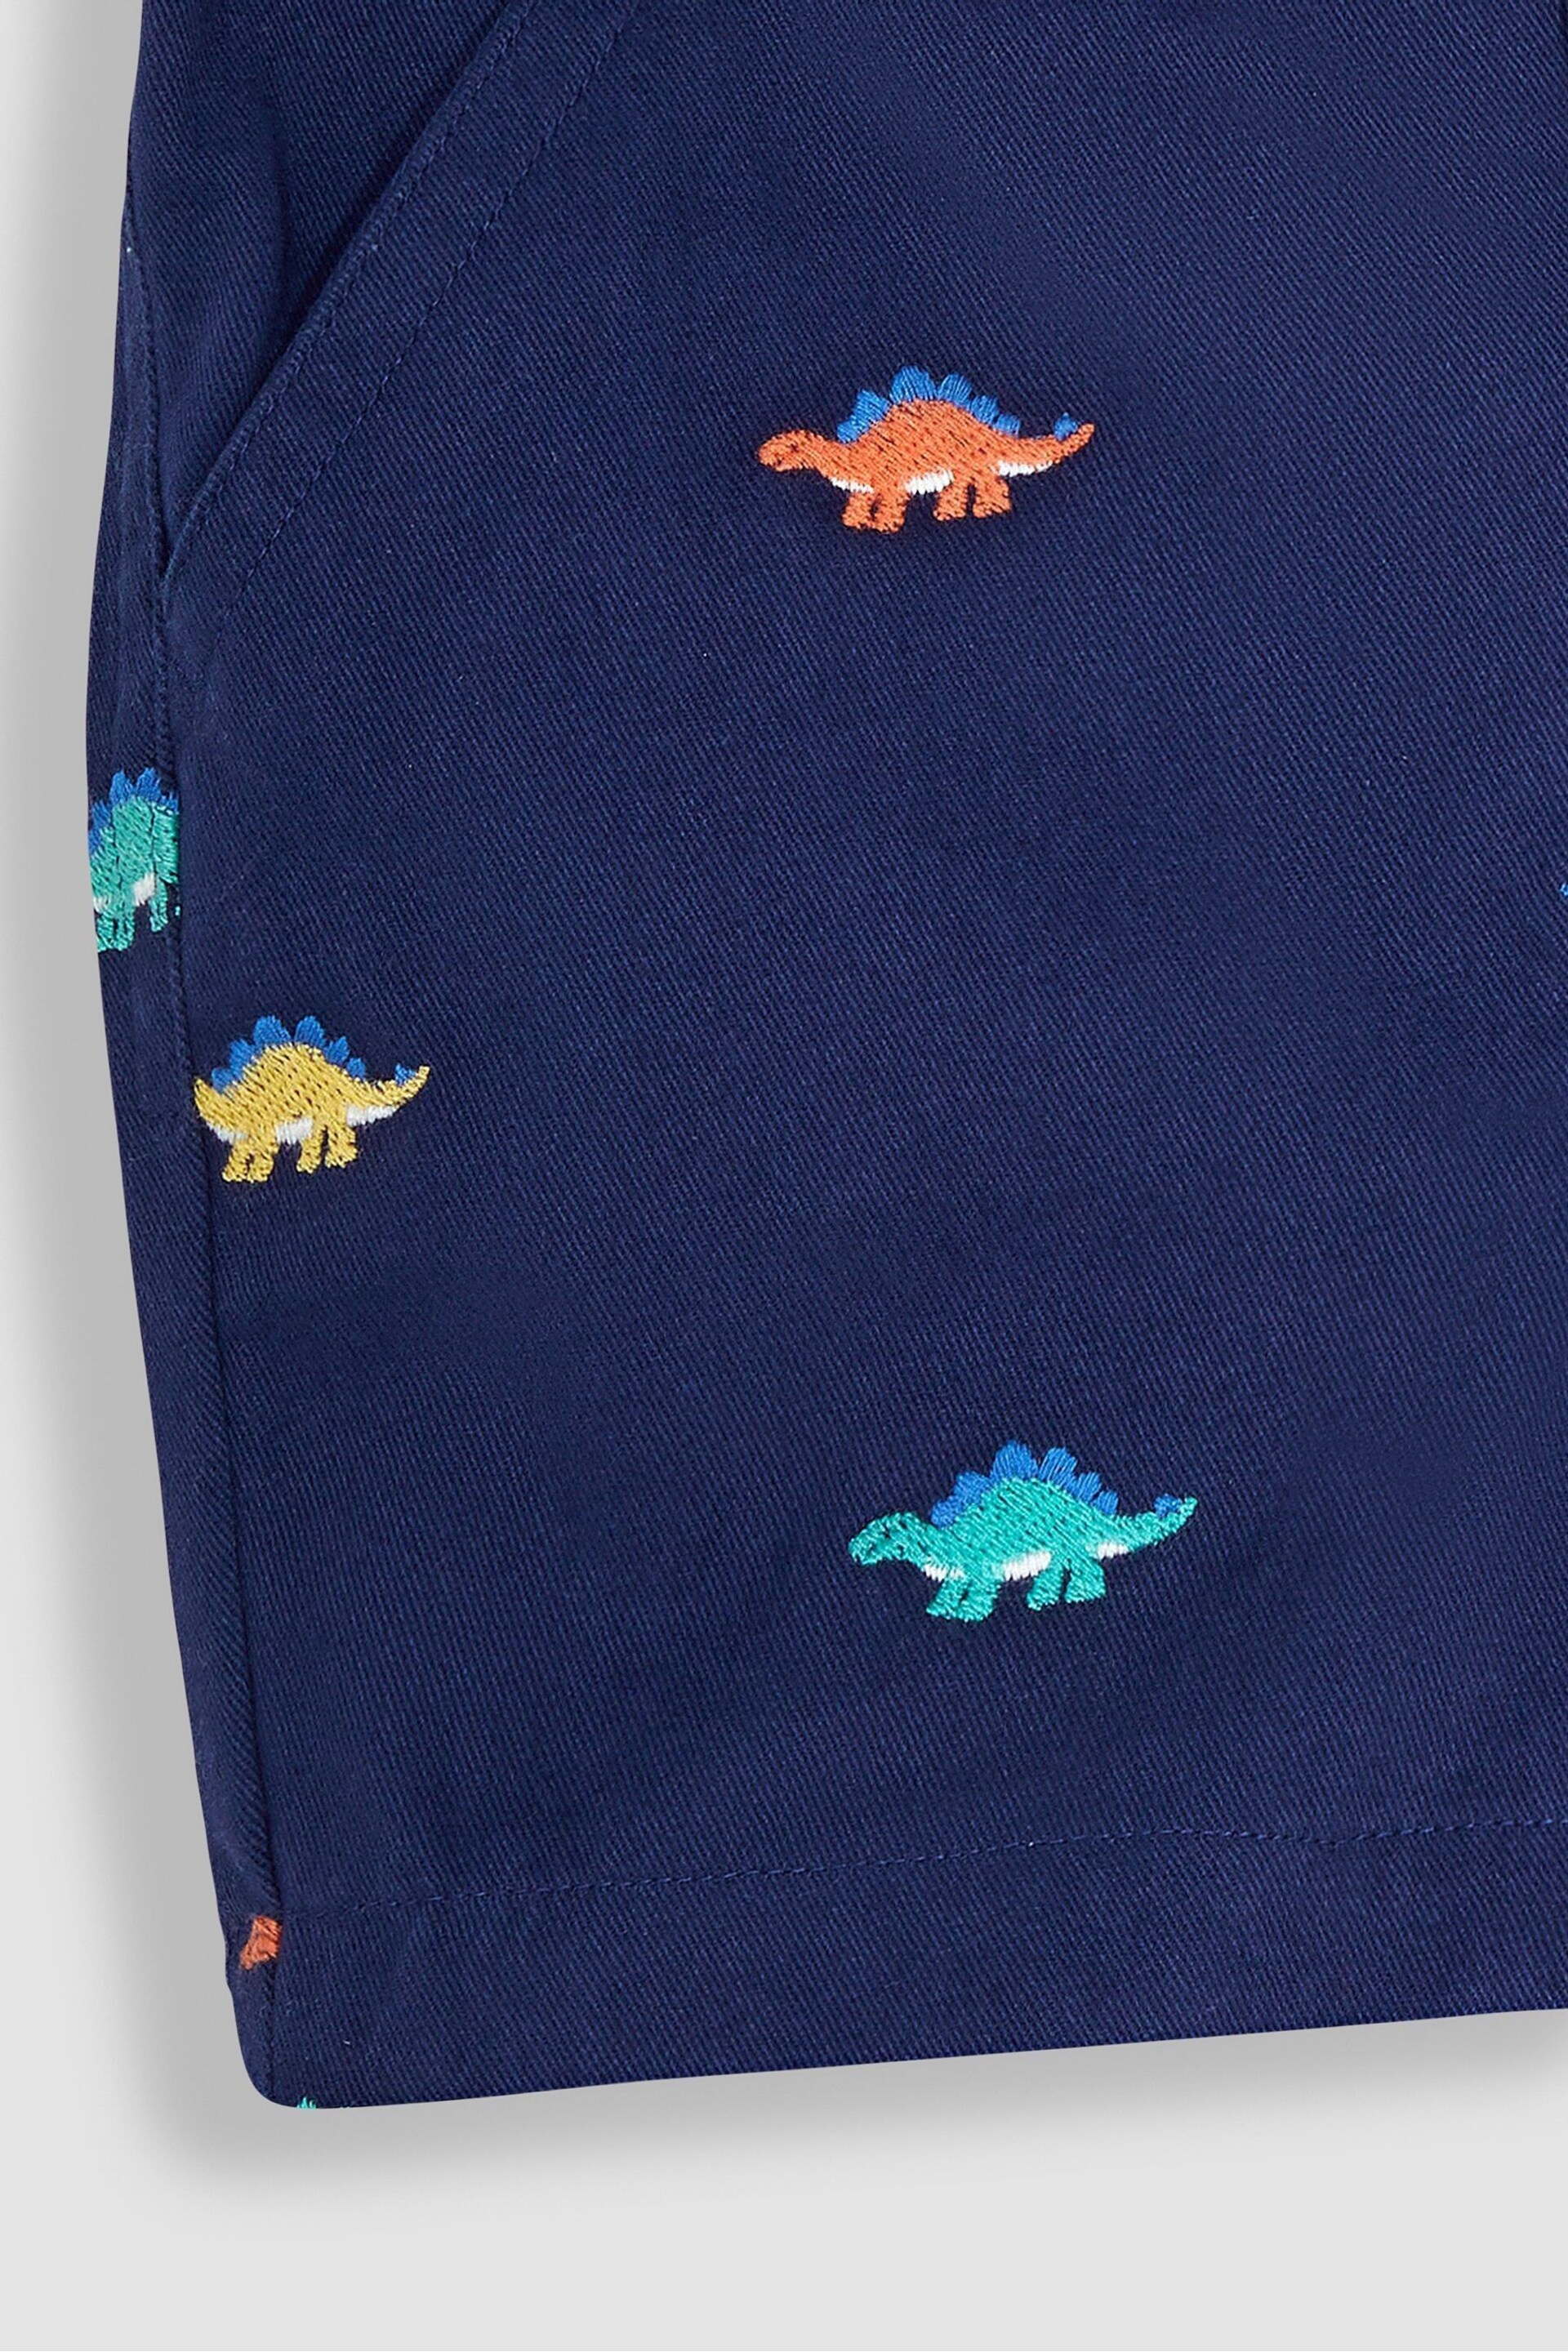 JoJo Maman Bébé Navy Blue Stegosaurus Embroidered Twill Shorts - Image 3 of 3